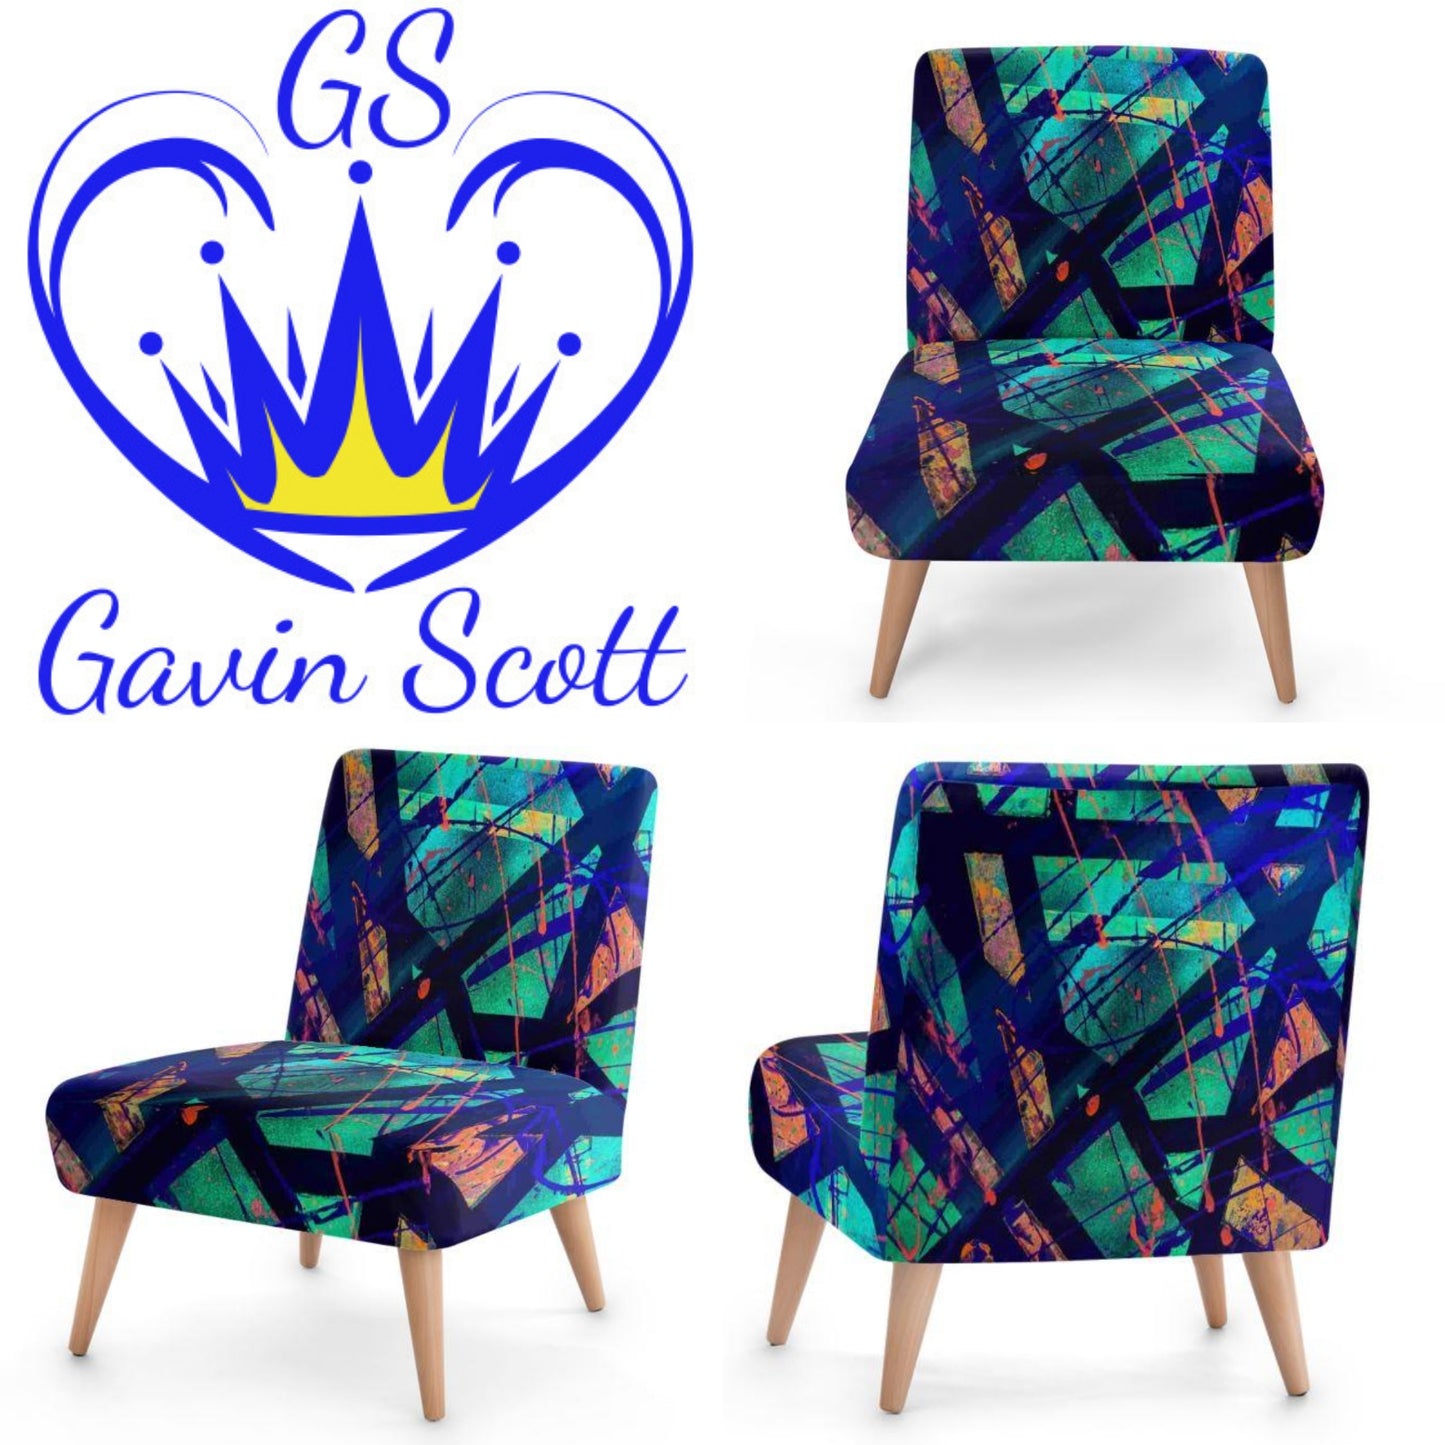 Gavin Scott Chill Chair